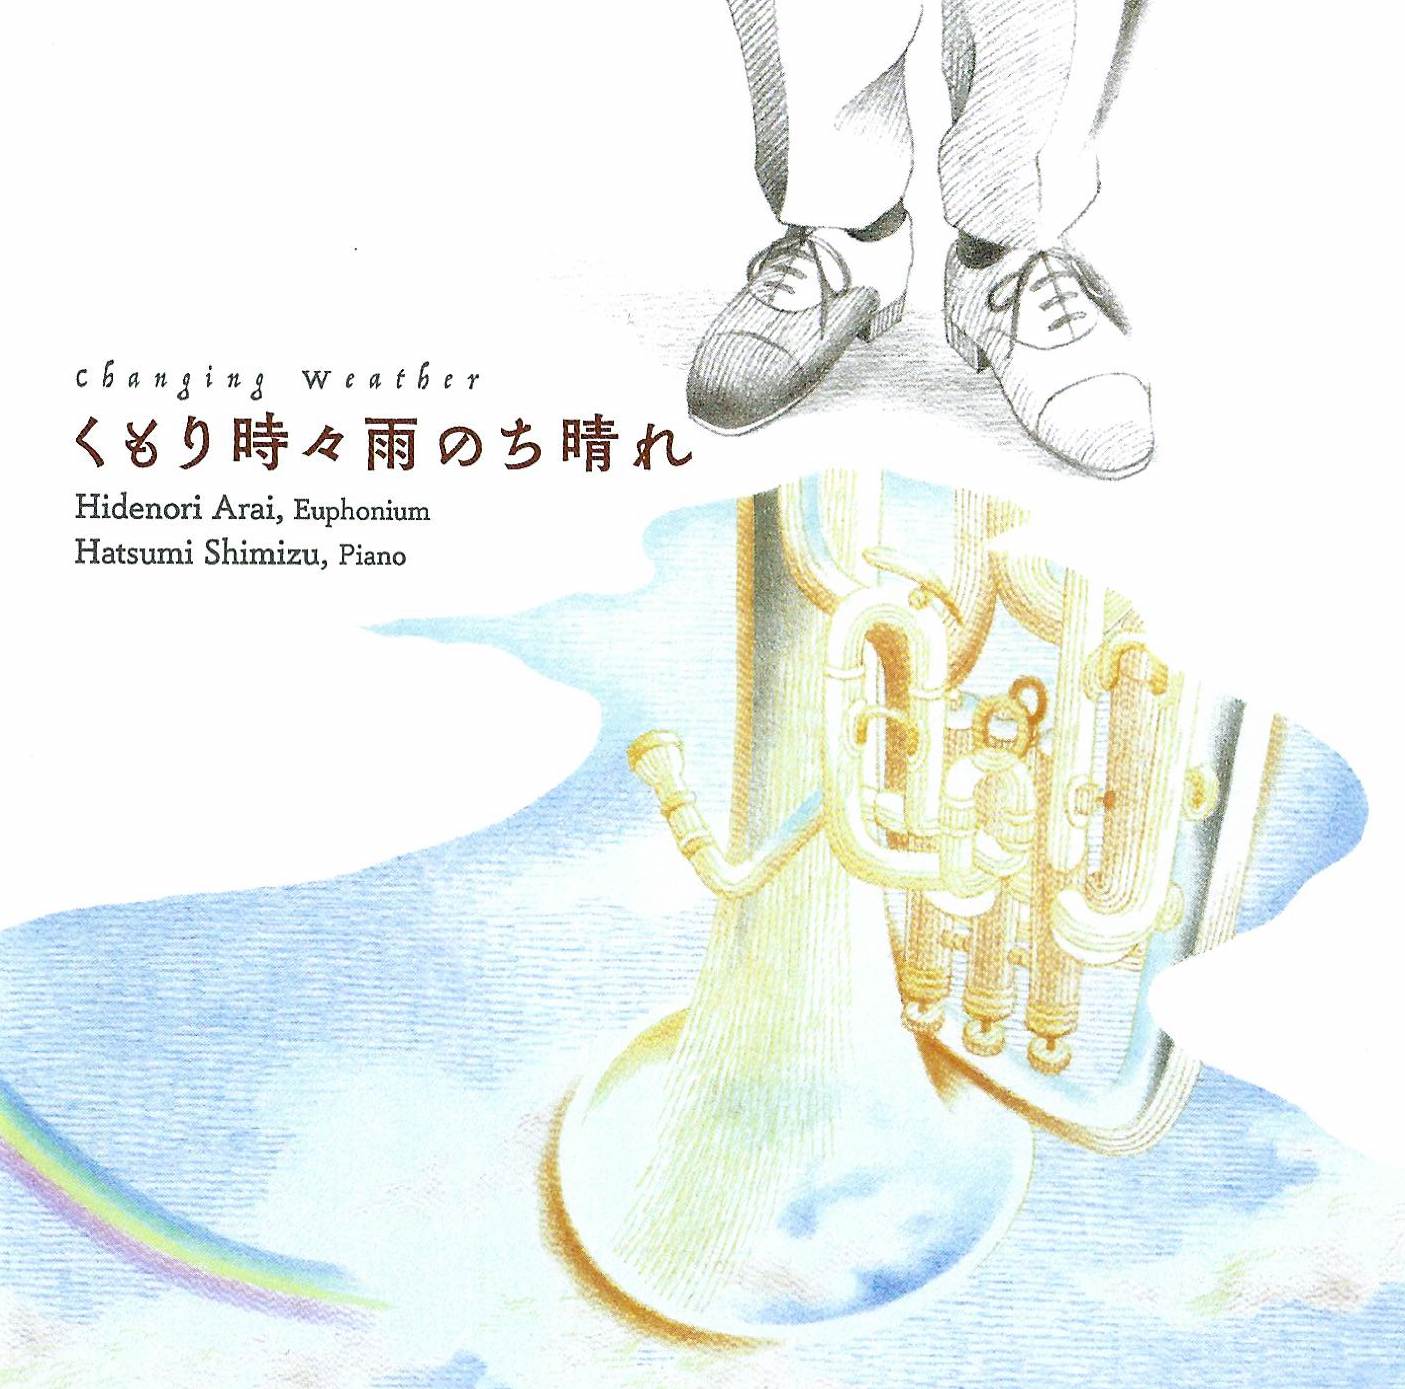 CD - Changing Weather - Hidenori Arai (euphonium) and Hatsumi Shimizu (piano)